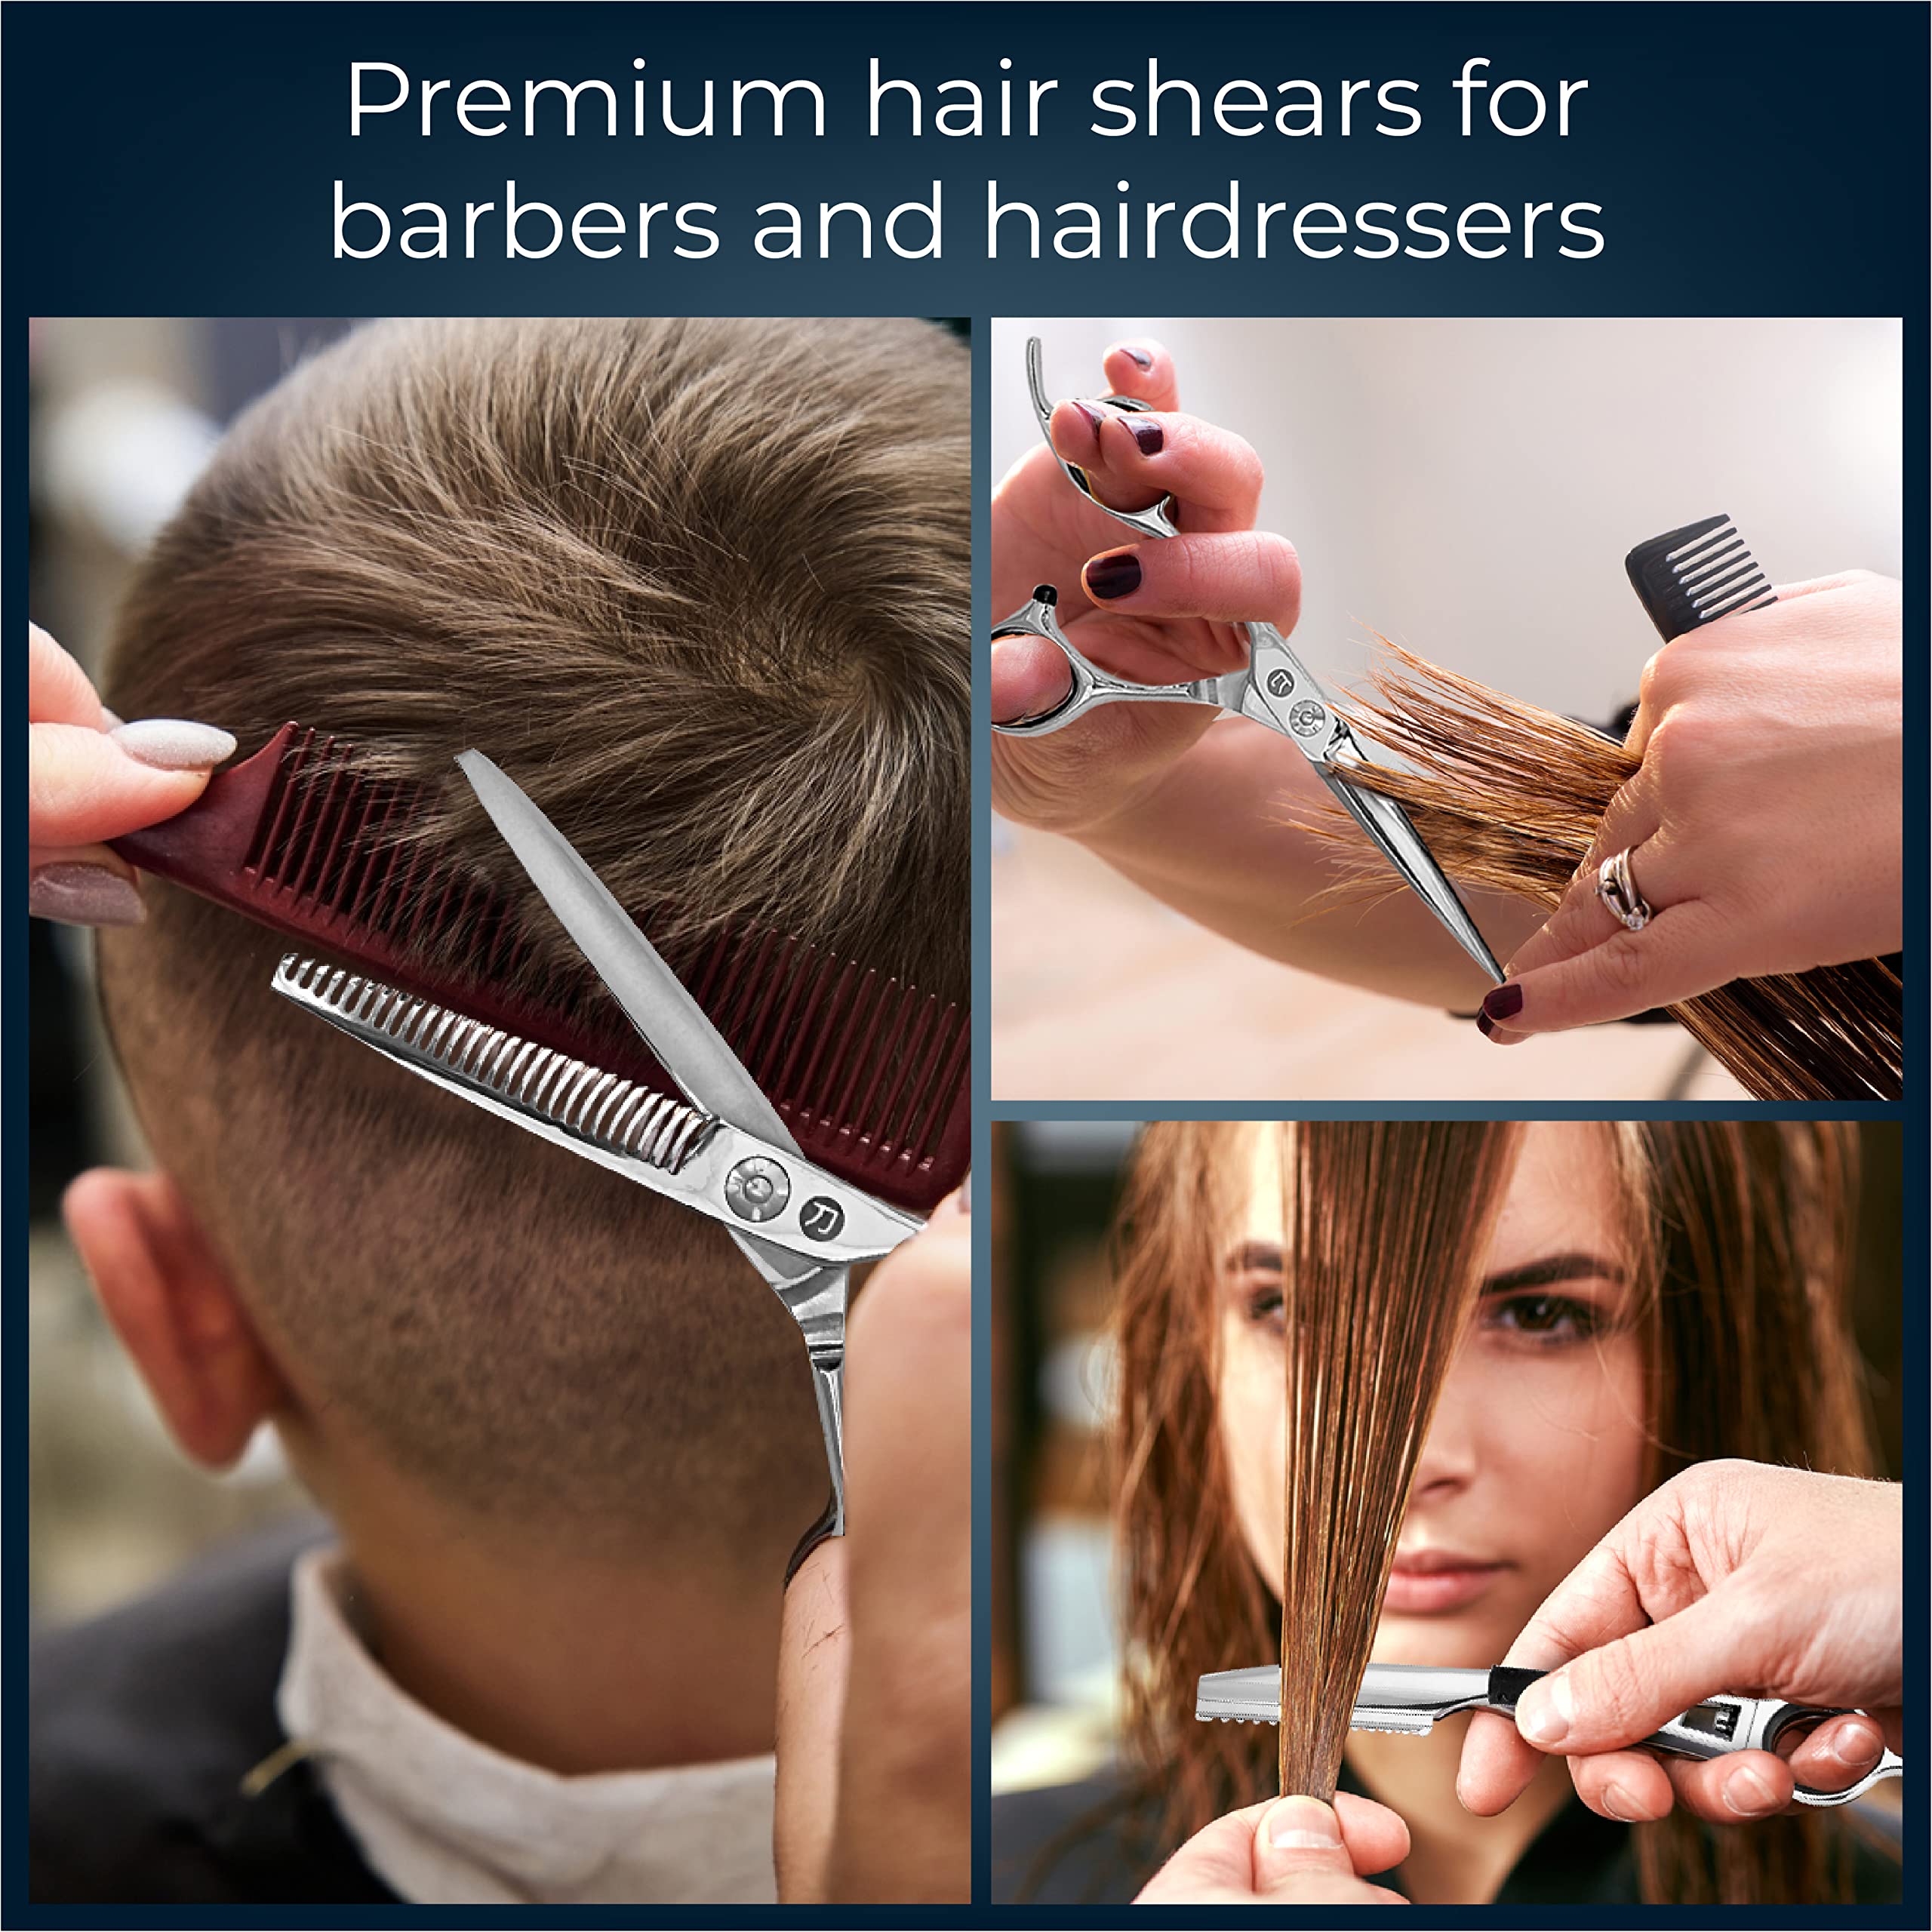 Saki Ha Professional Hair Shears Set 6.0 Inch - Includes Hair Scissors, Thinning Shears and Razor - Handmade from Japanese Steel